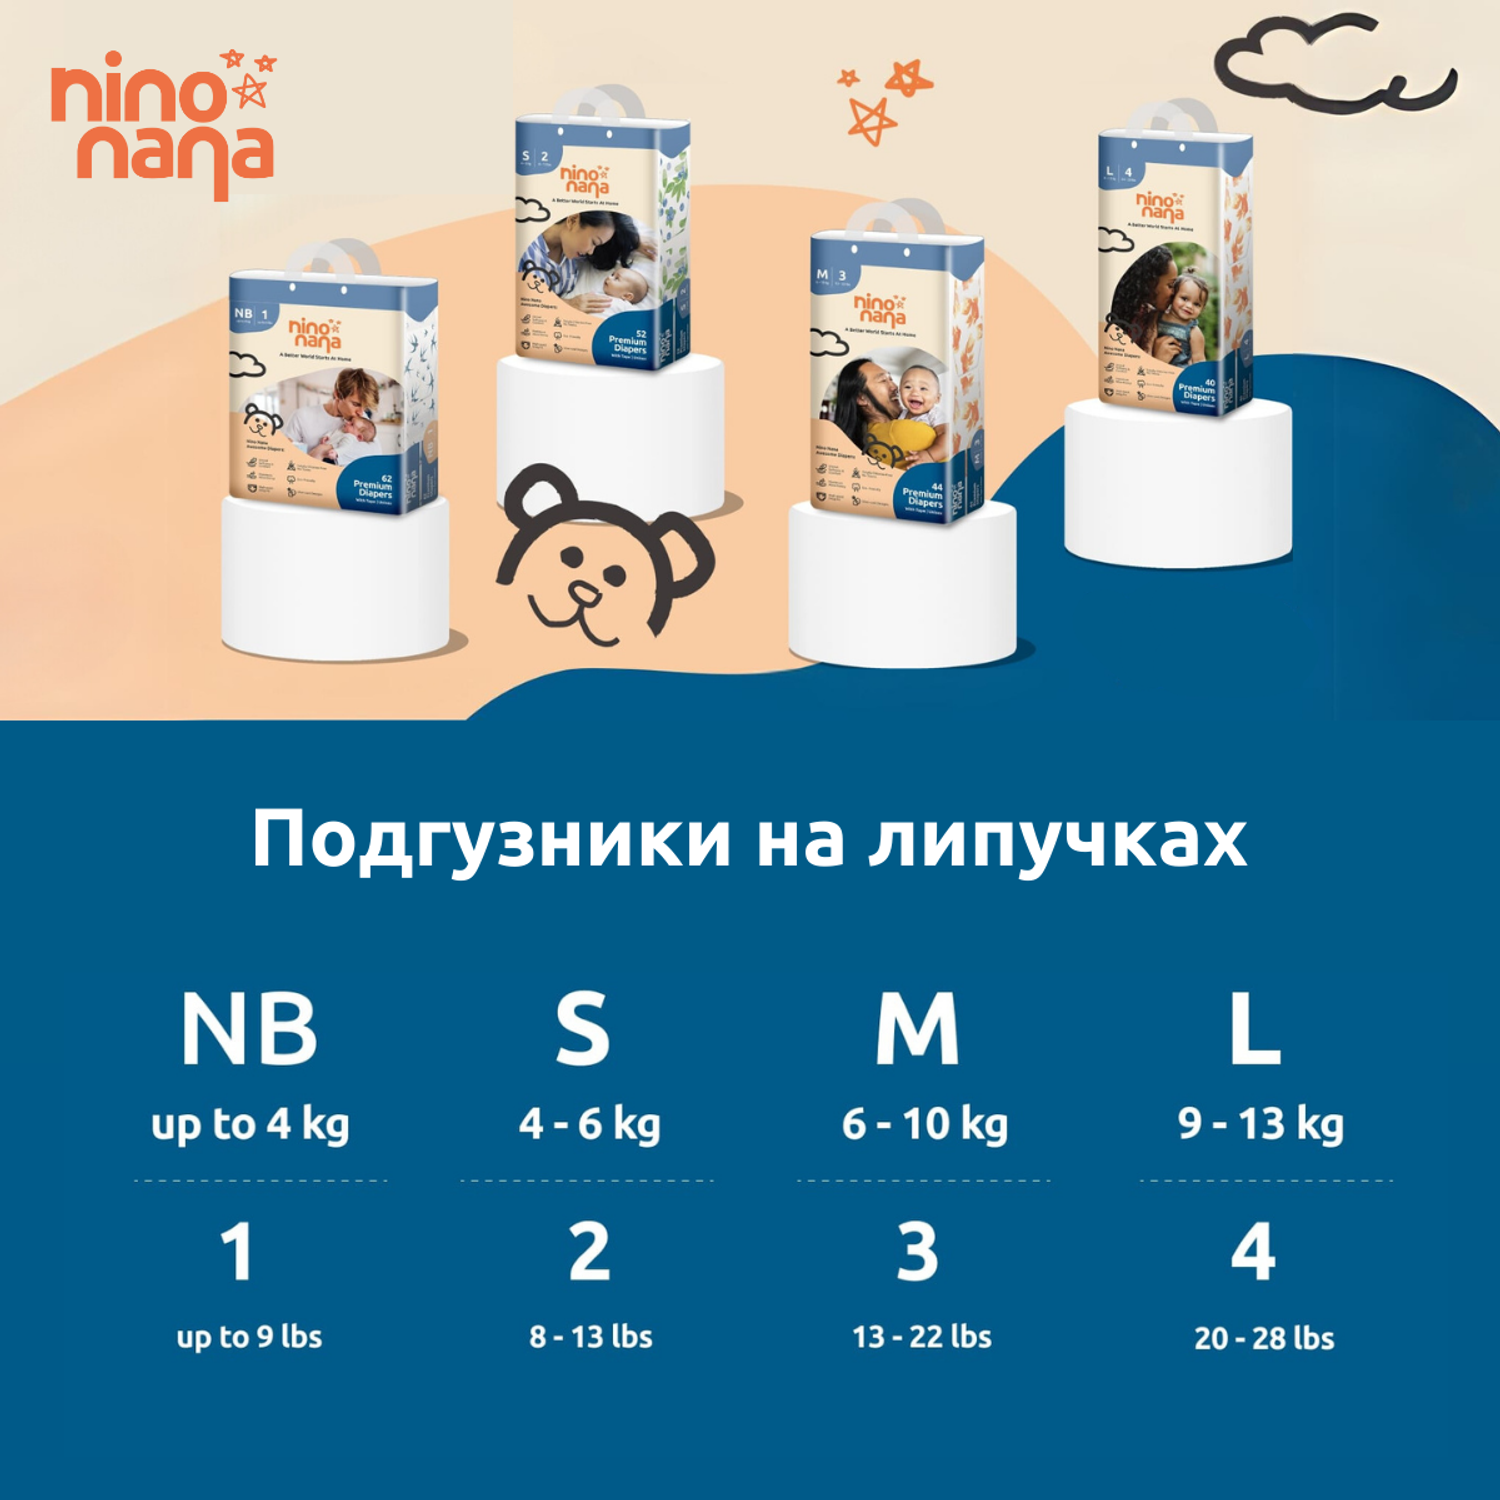 Подгузники Nino Nana S 4-6 кг. 52 шт. Птички - фото 3